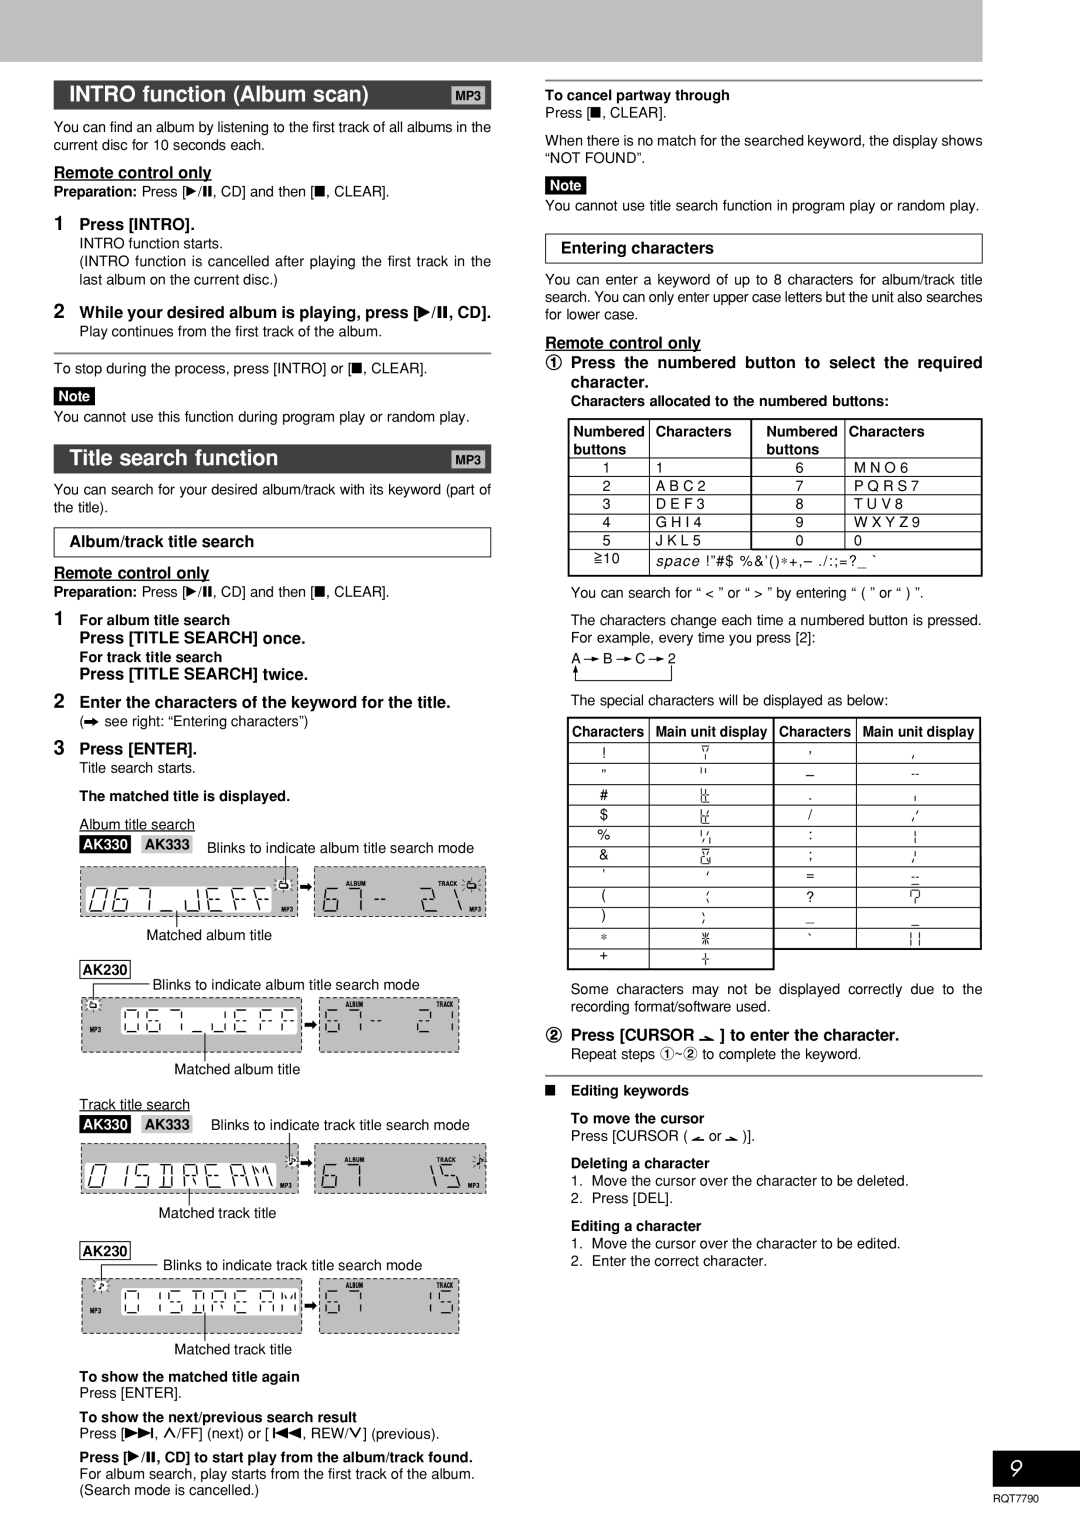 Panasonic SC-AK333, SC-AK230 operating instructions INTRO function Album scan, Title search function 